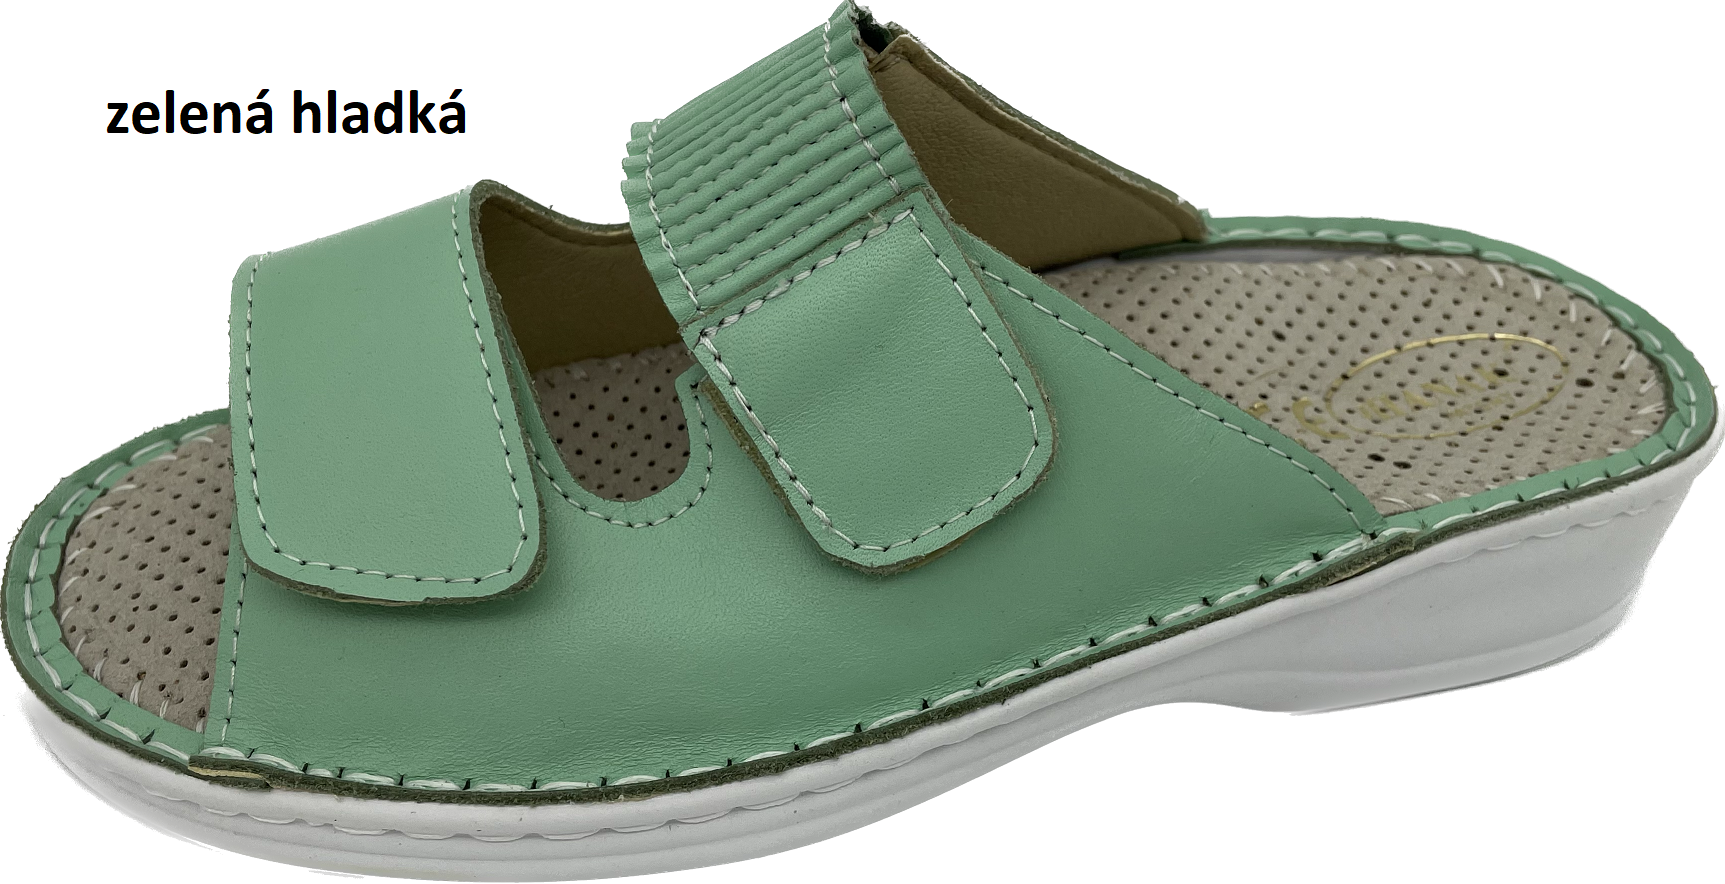 Boty Hanák vzor 304 - bílá podešev Barva usně: zelená hladká, Velikosti obuvi: 41